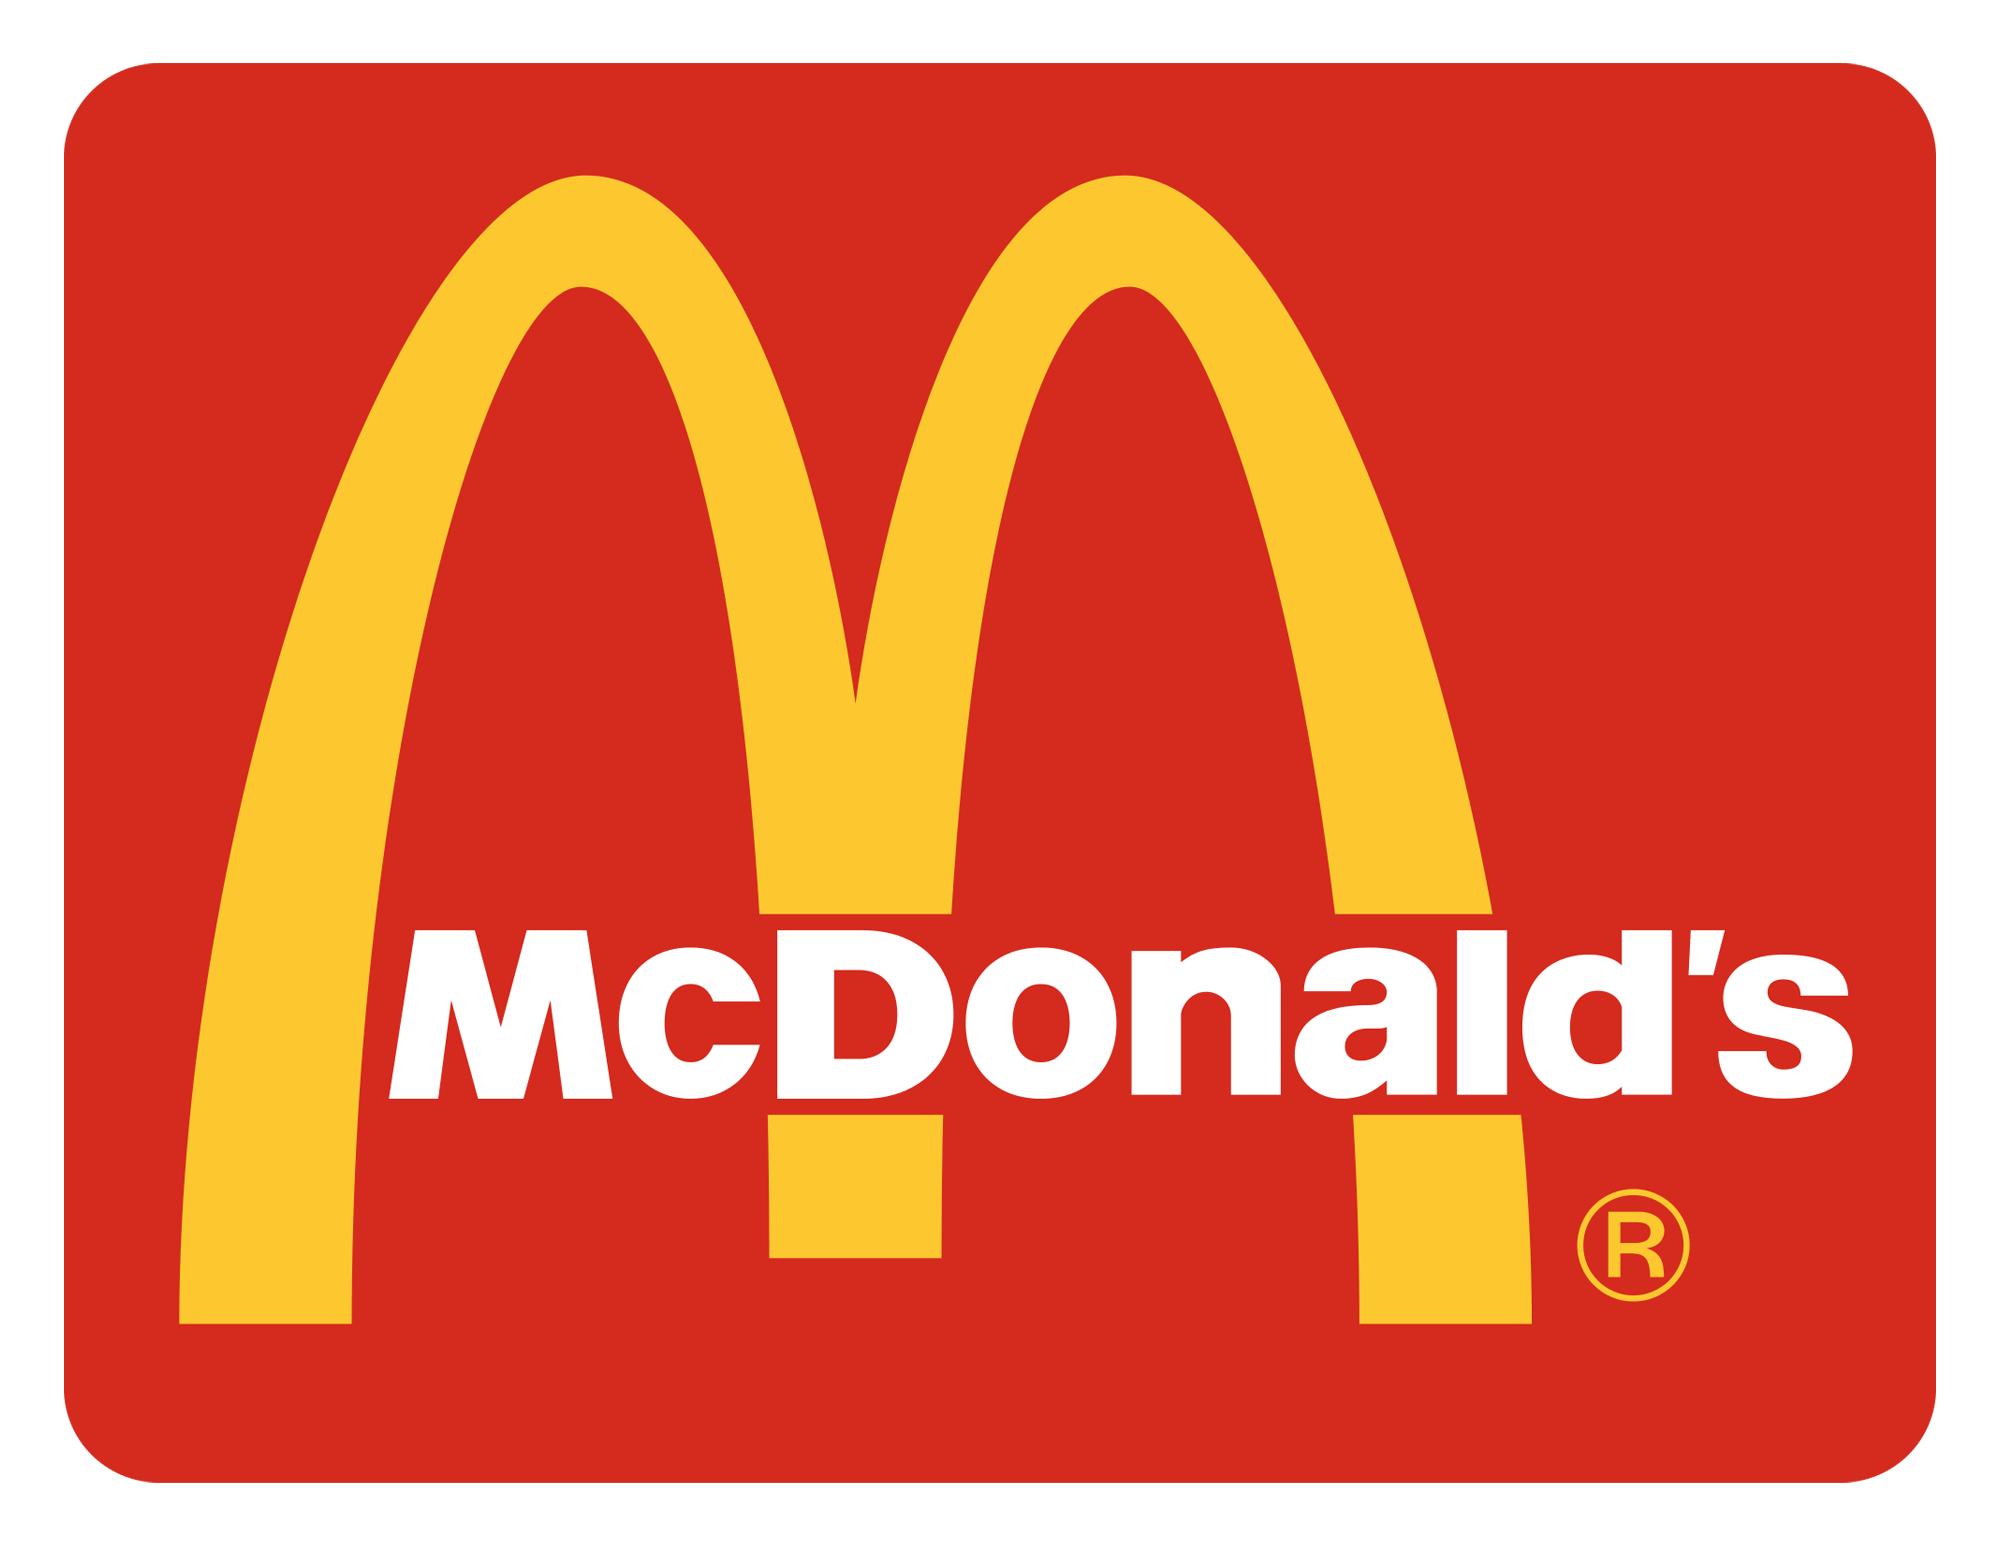 McDonalds Logo PNG Image - PurePNG | Free transparent CC0 PNG Image Library